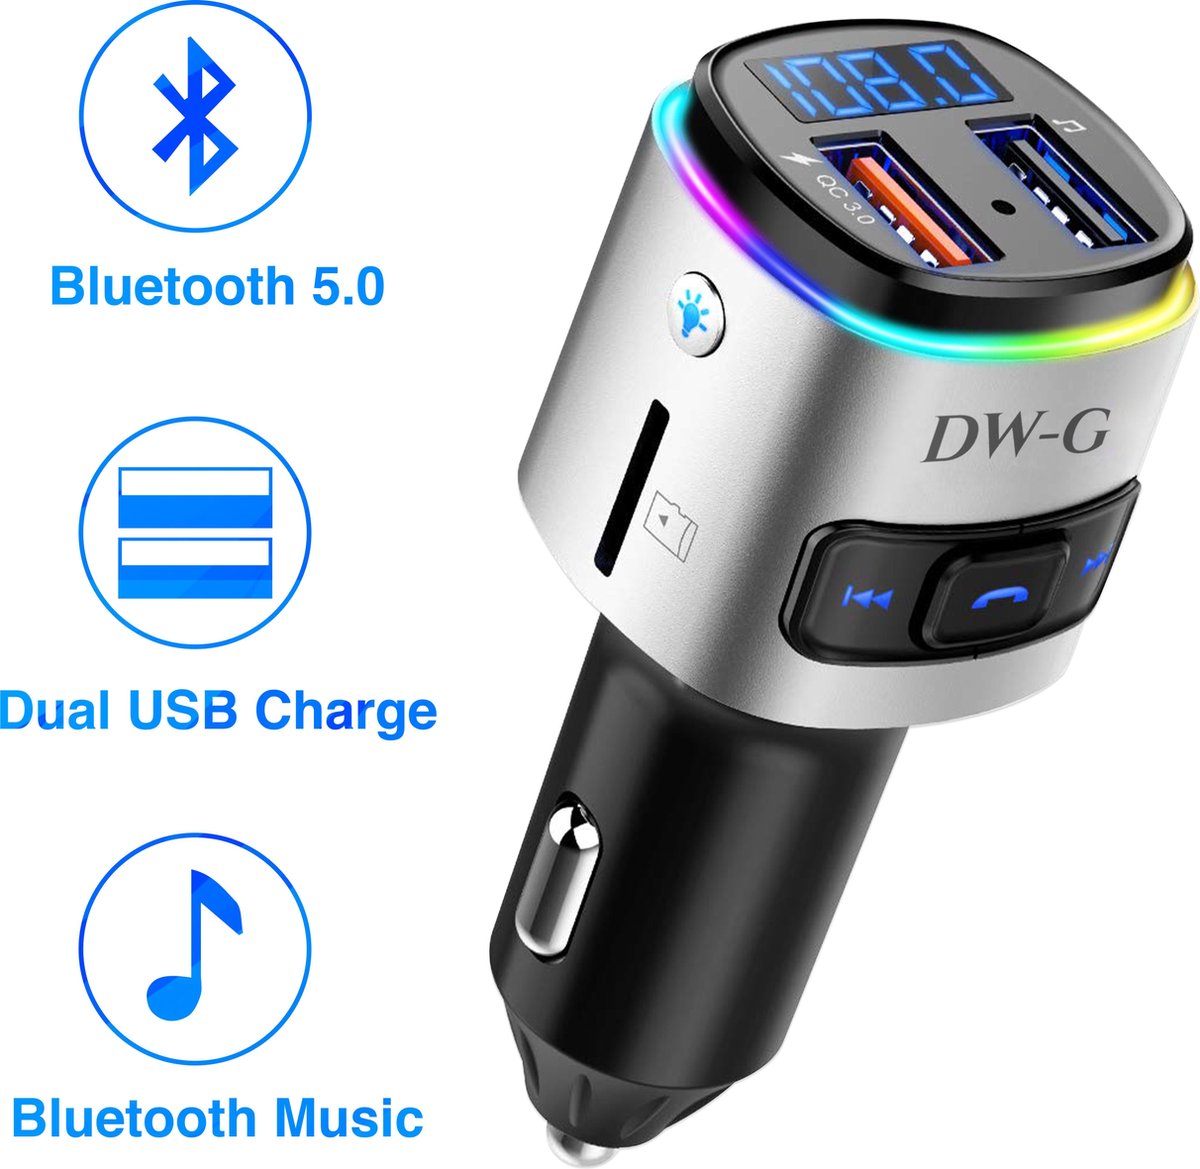 DW-G Bluetooth FM Transmitter - Auto Lader - Carkit - Handsfree - MP3 - USB - SD Kaart - Snel Lader - Audio Receiver
